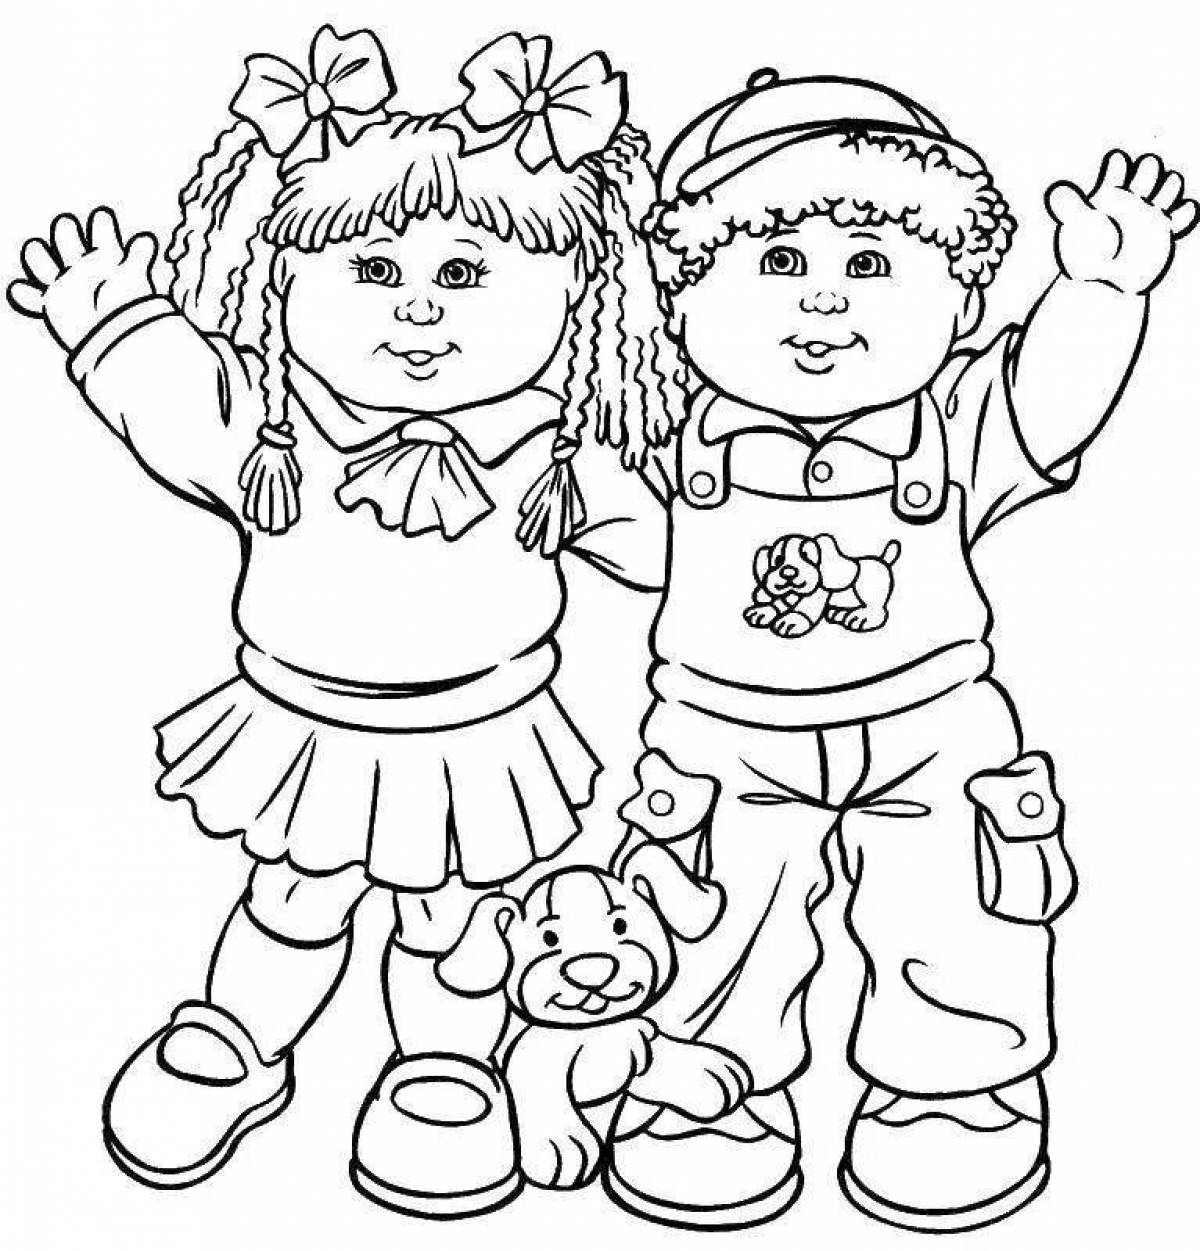 Joyfully bright children's friendship coloring book